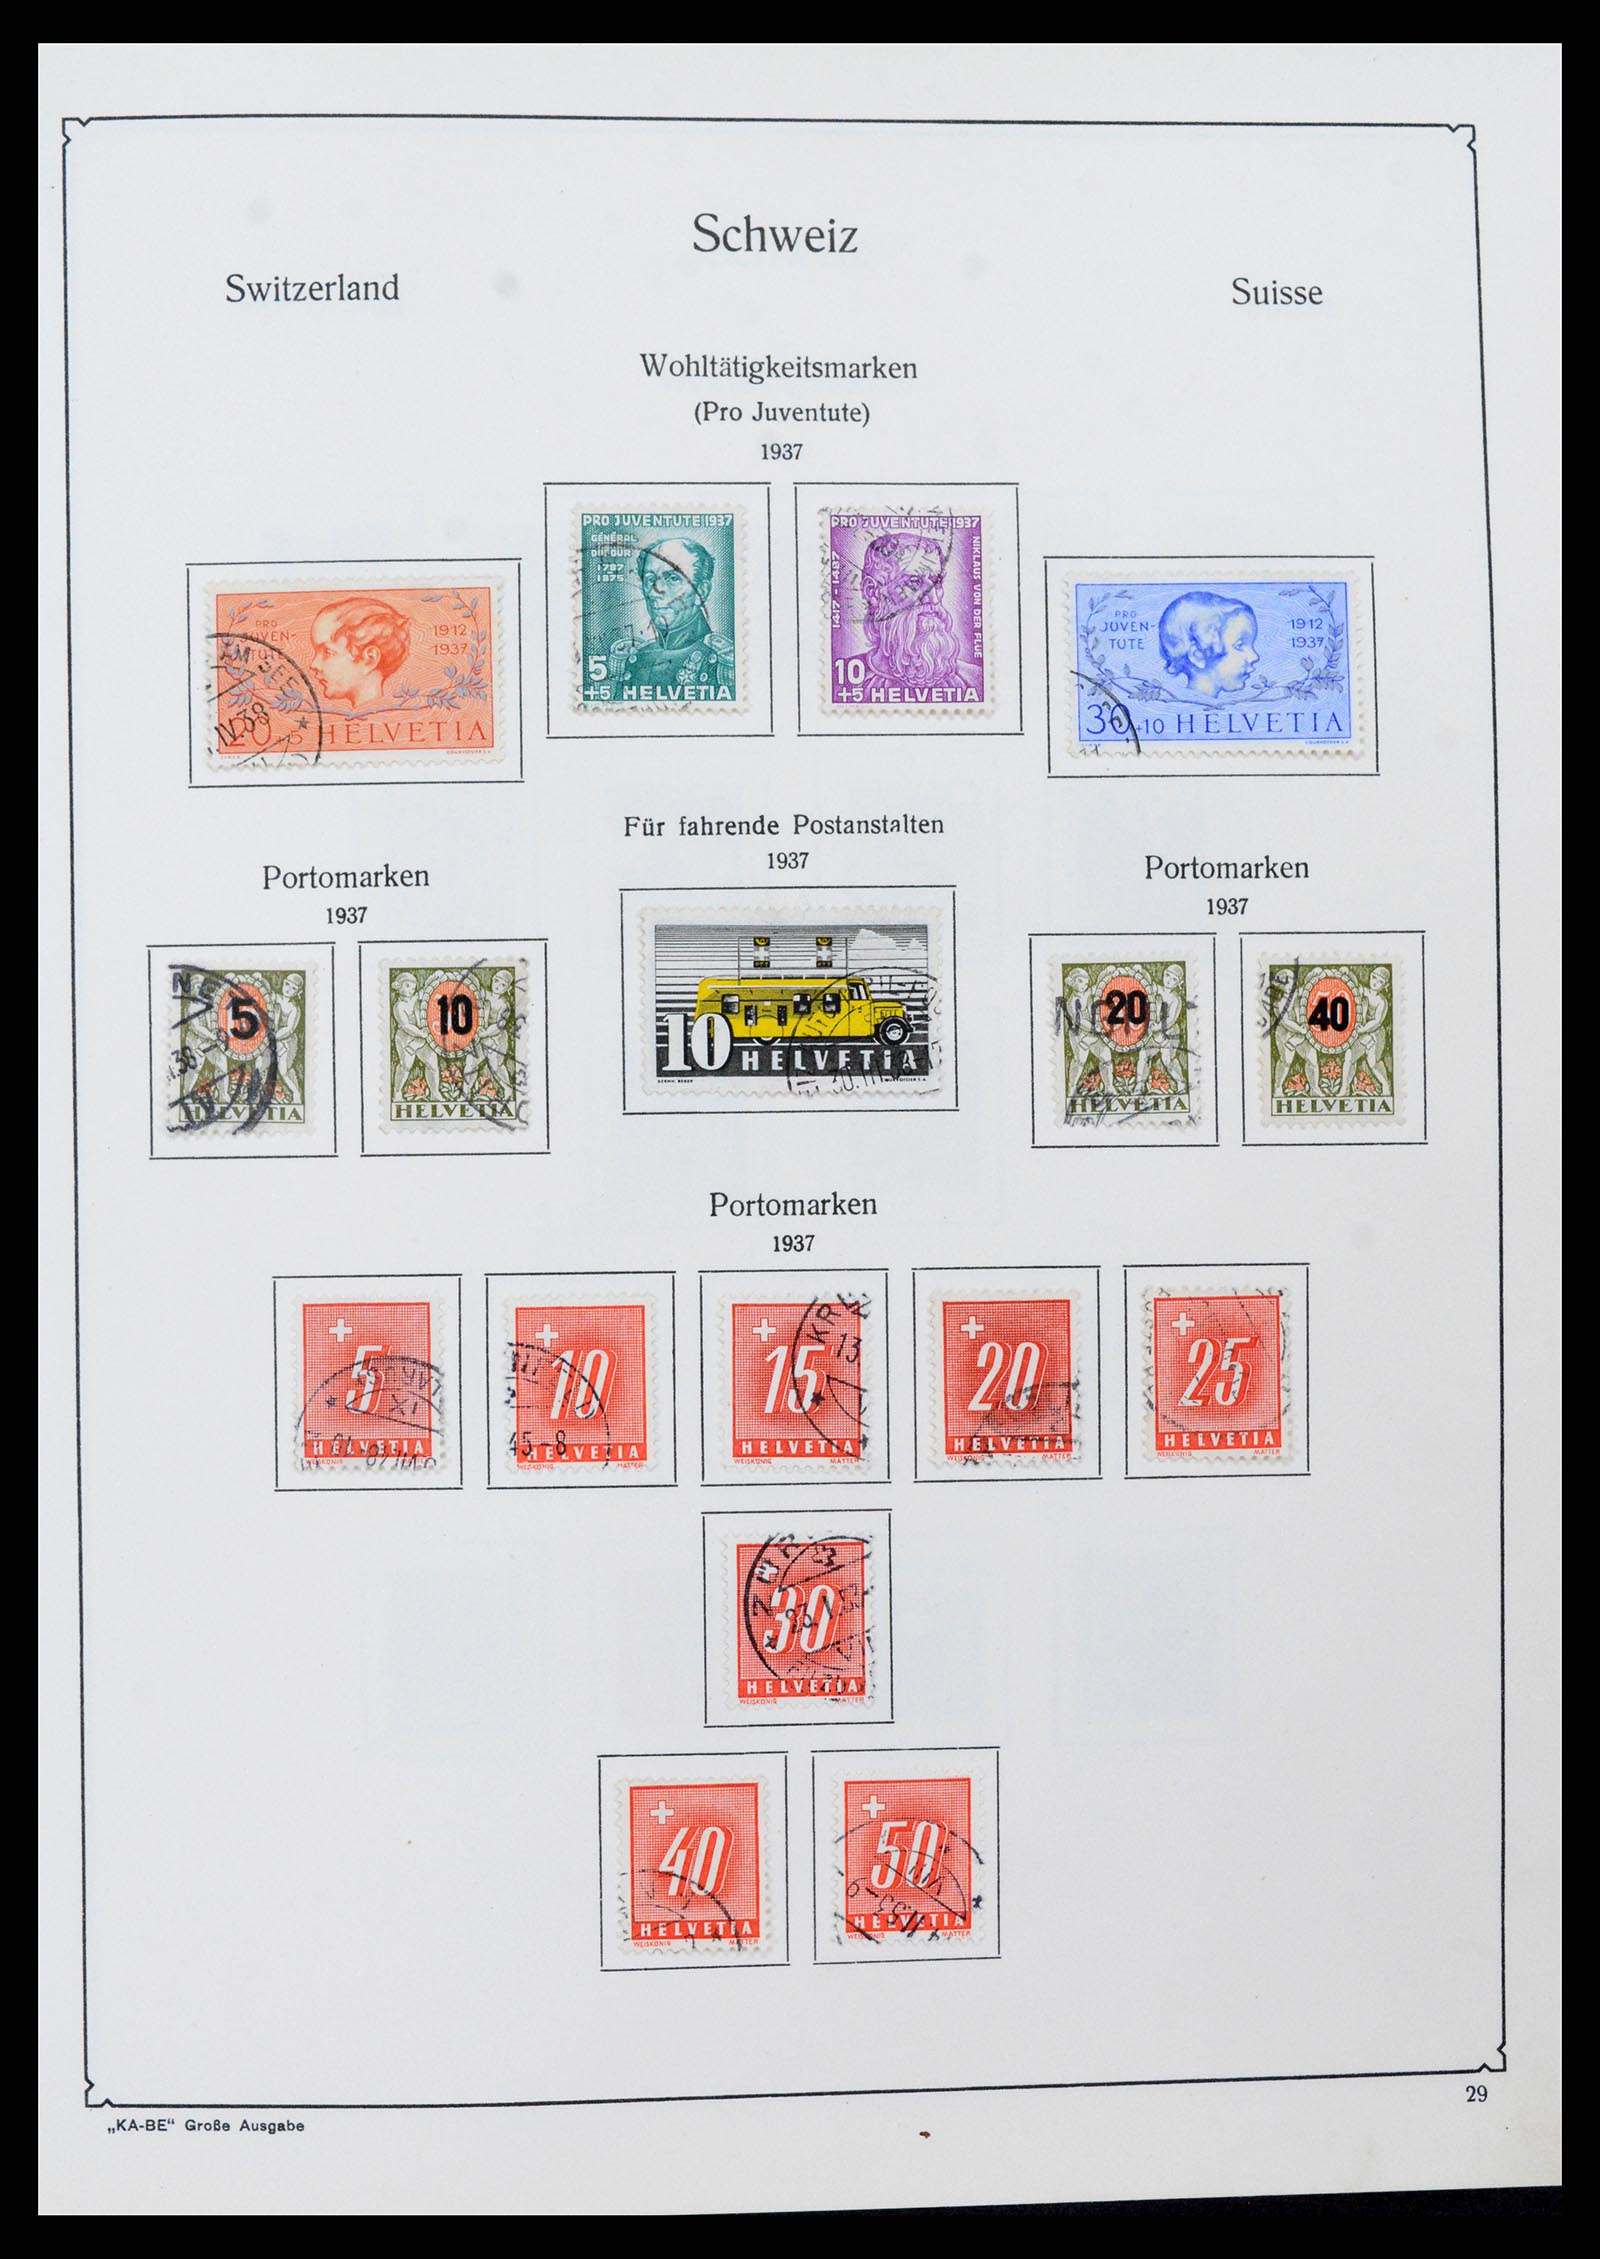 37588 028 - Stamp collection 37588 Switzerland 1854-1974.